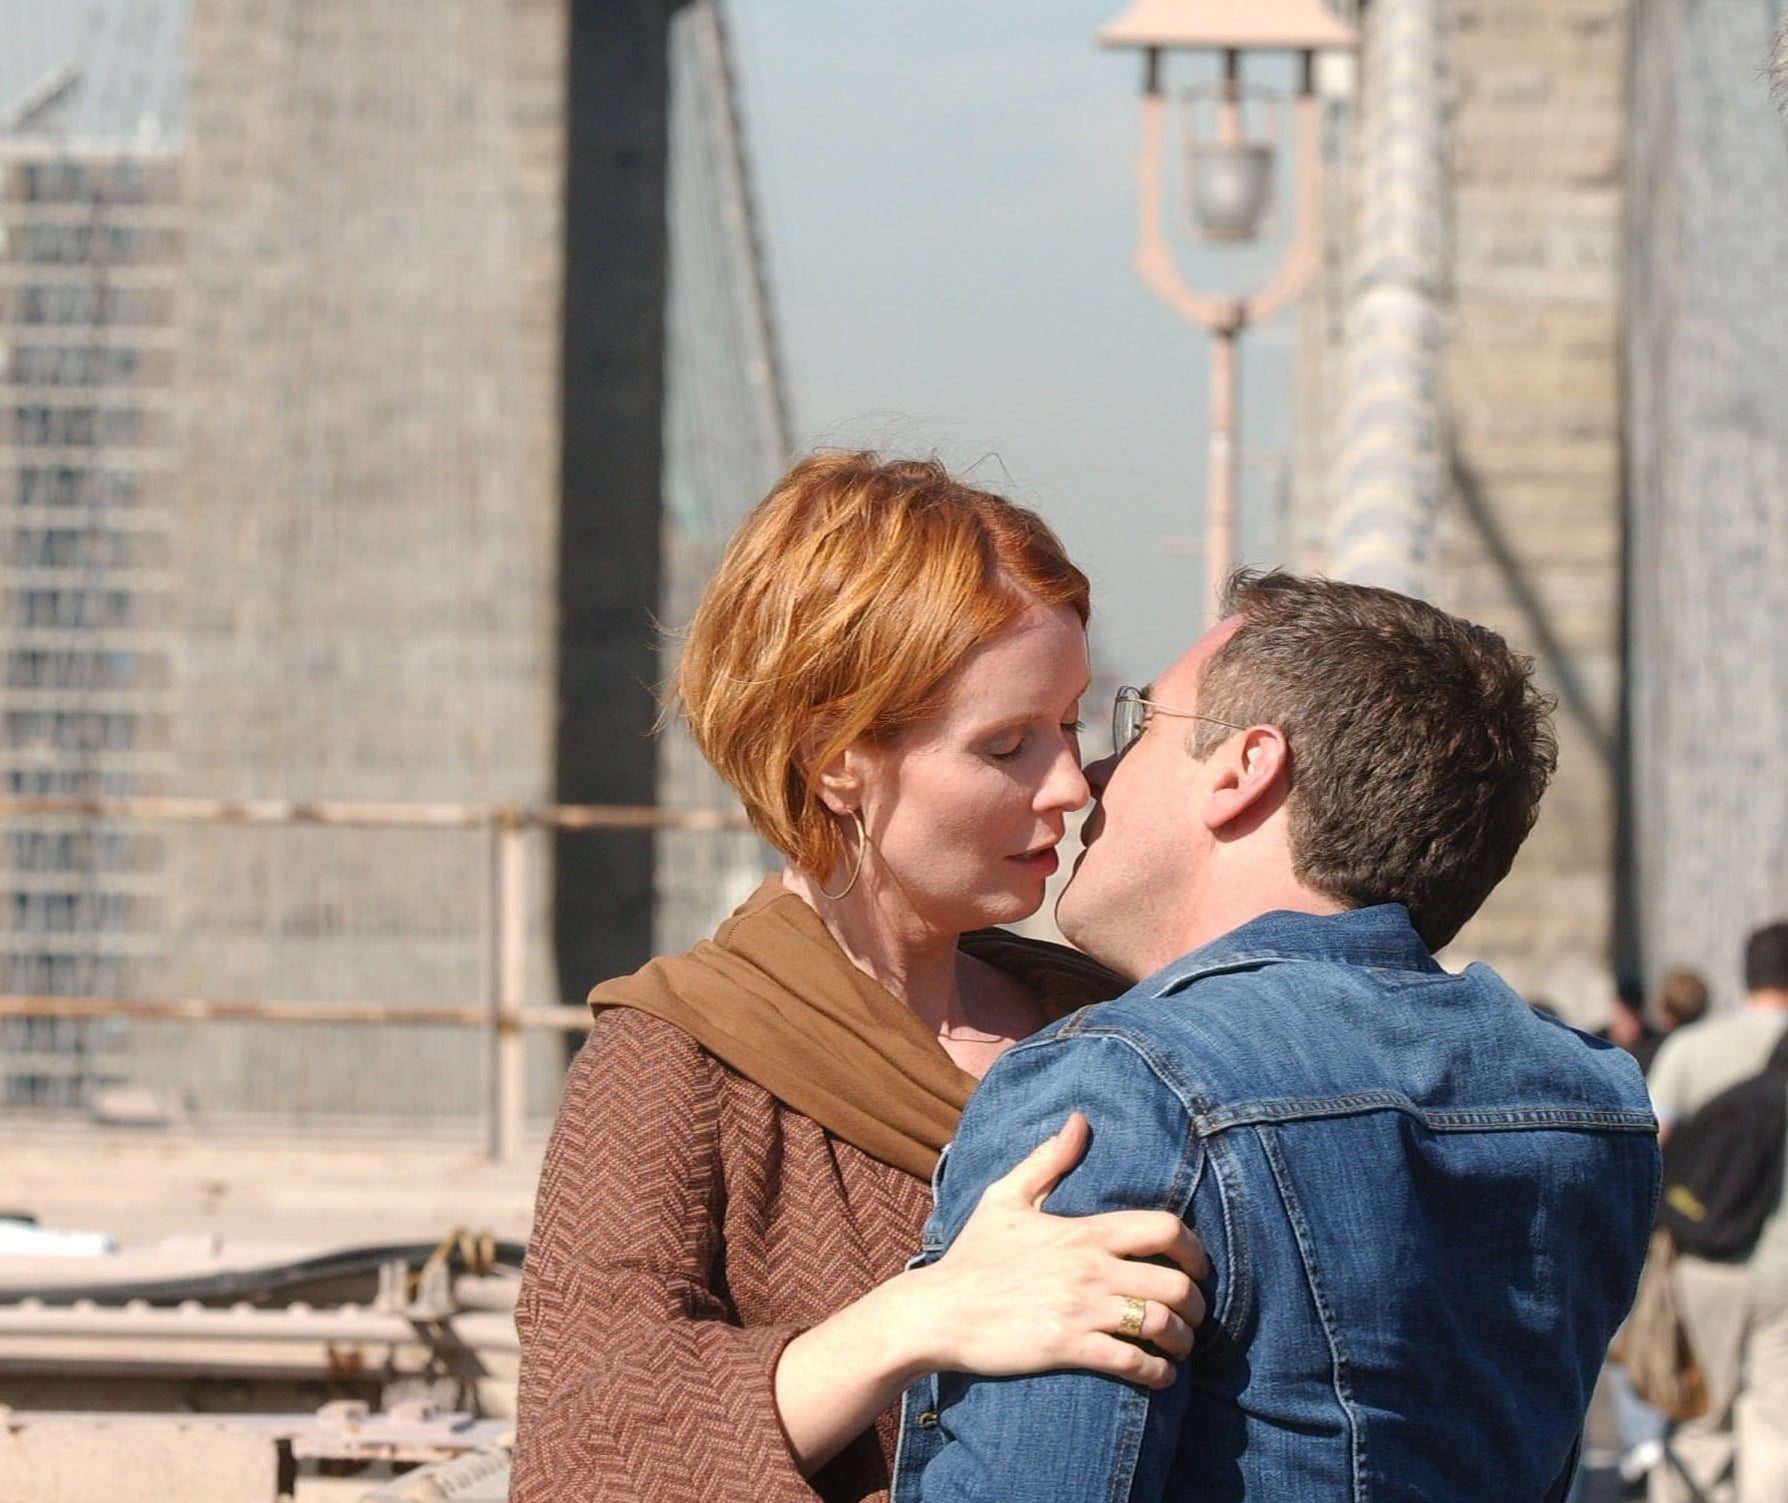 Miranda and Steve embrace on a bridge